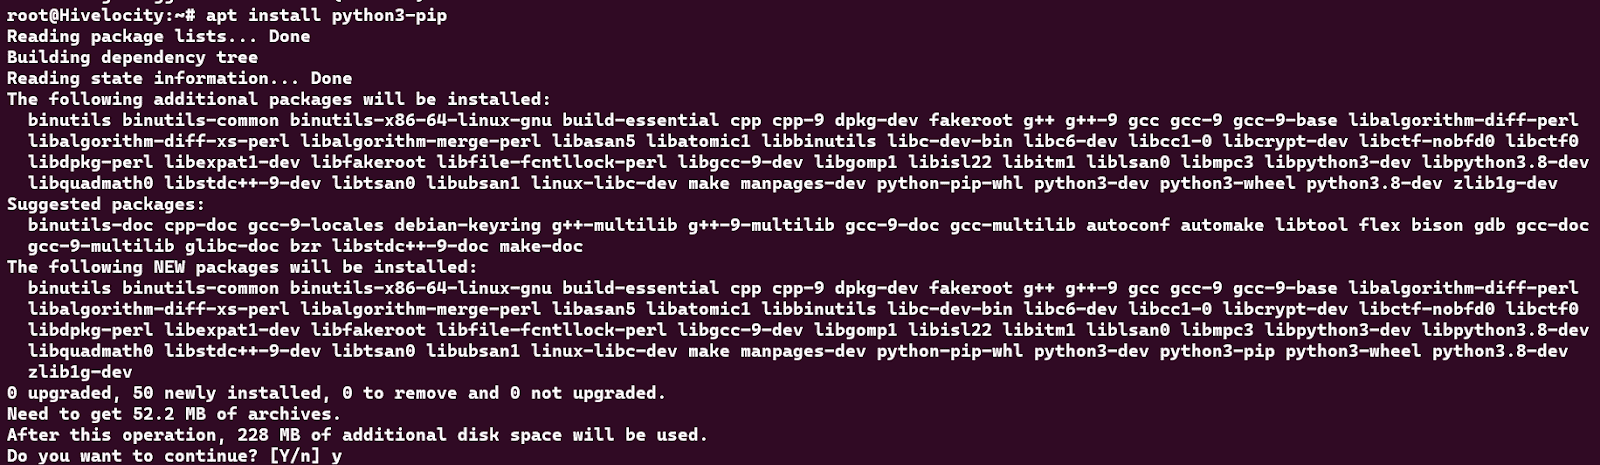 Terminal window highlighting the "apt install python-pip" command